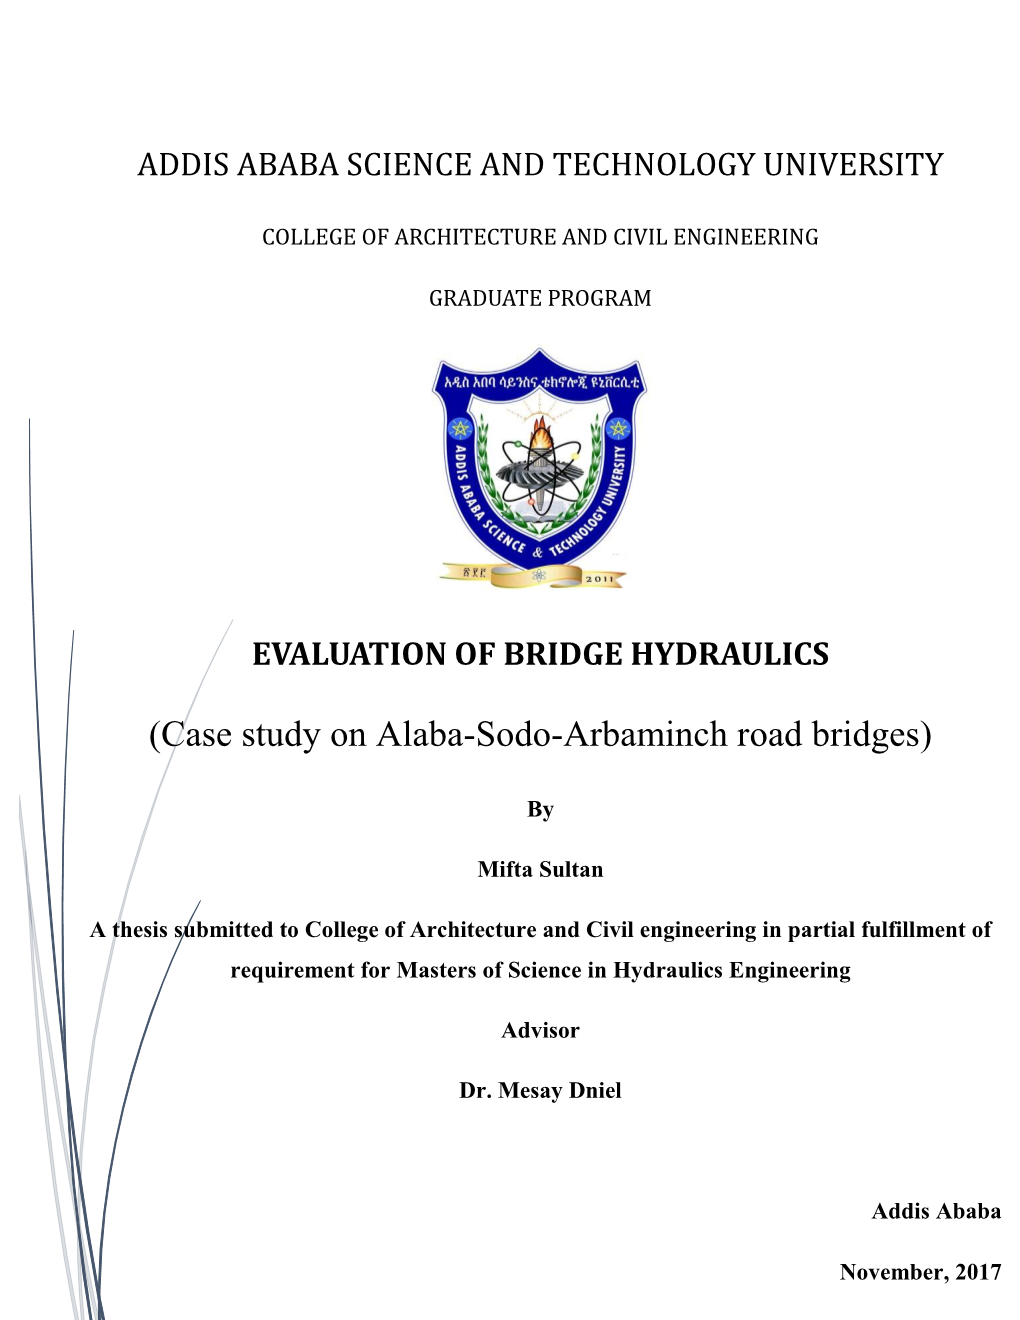 Case Study on Alaba-Sodo-Arbaminch Road Bridges